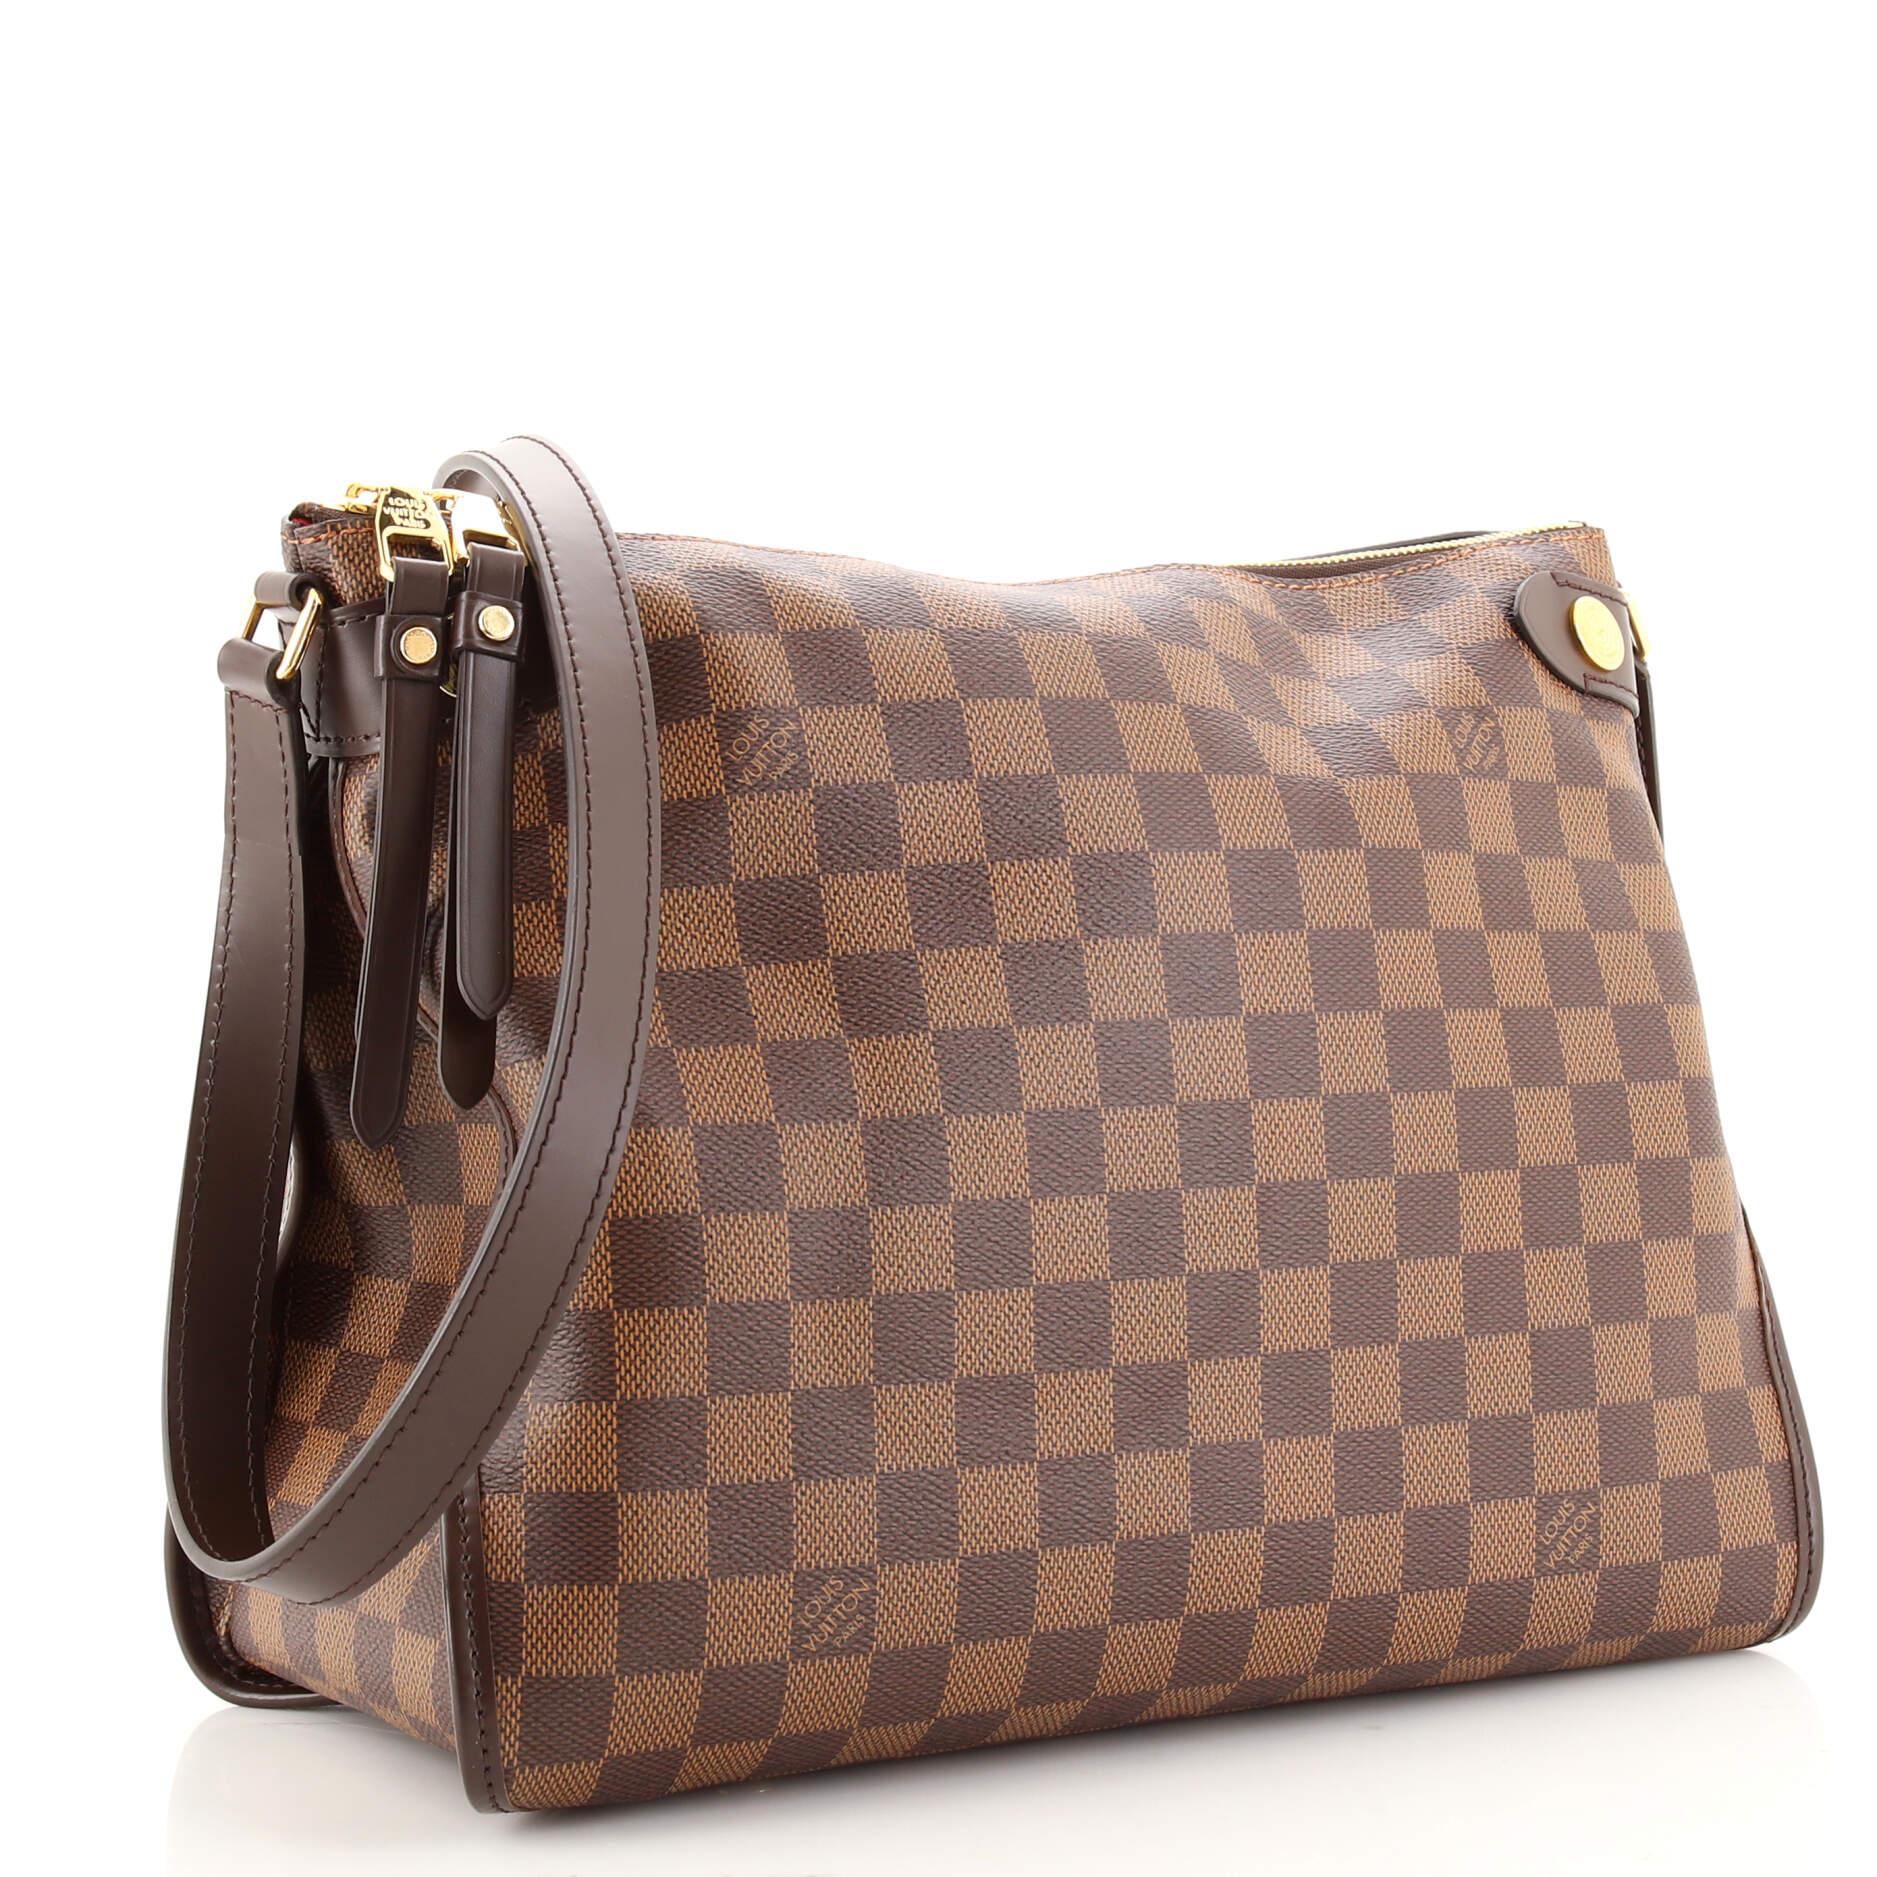 Duomo Louis Vuitton Bag - For Sale on 1stDibs